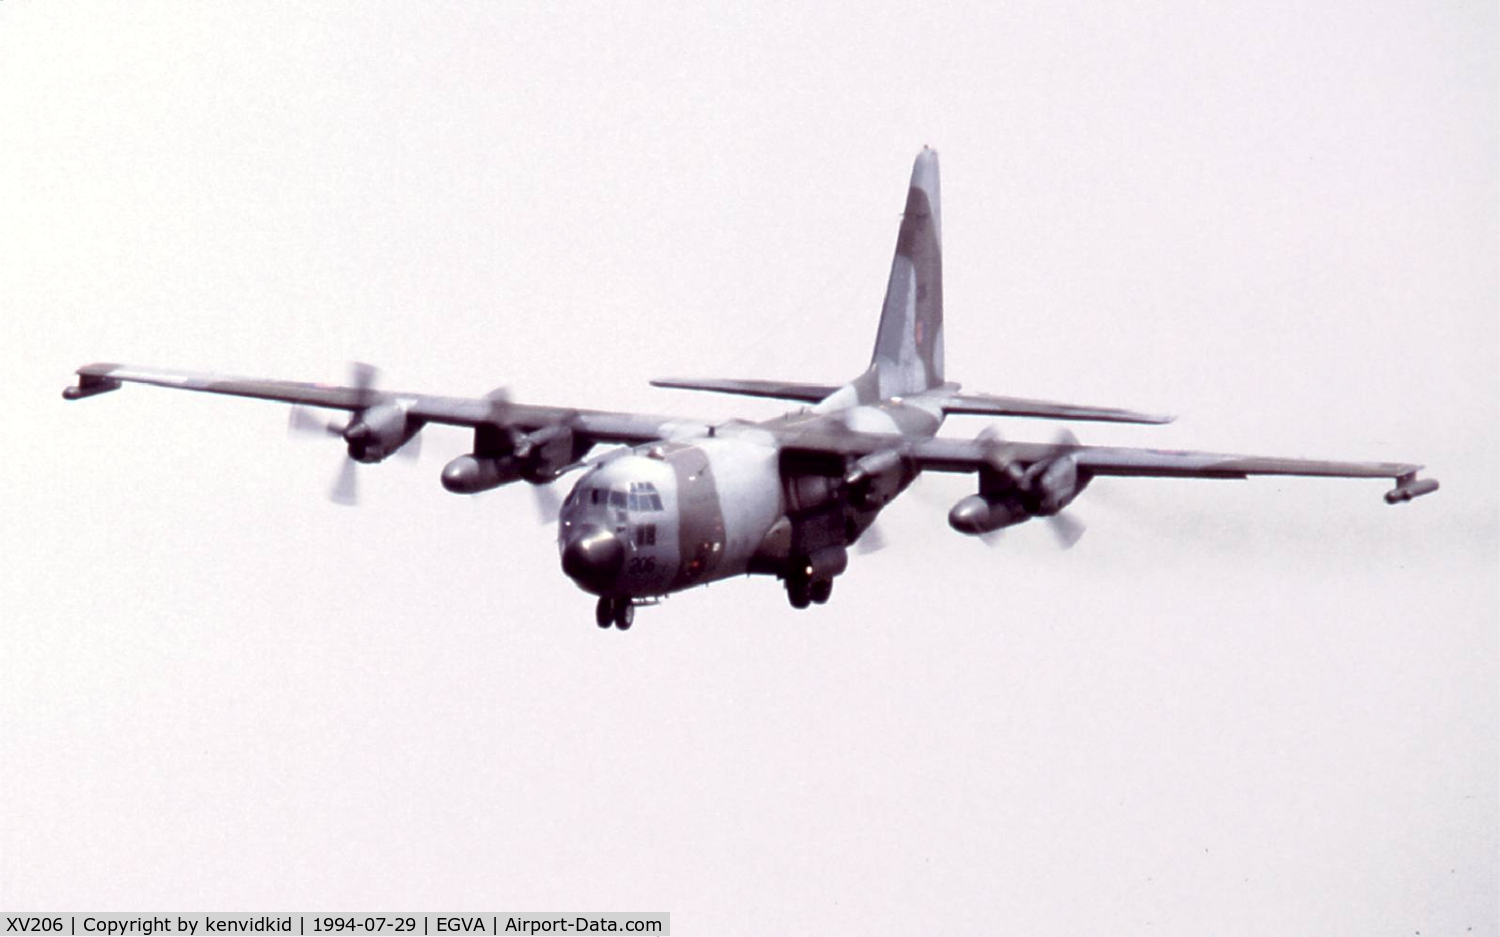 XV206, Lockheed C-130K Hercules C.1 C/N 382-4231, Royal Air Force arriving at RIAT.